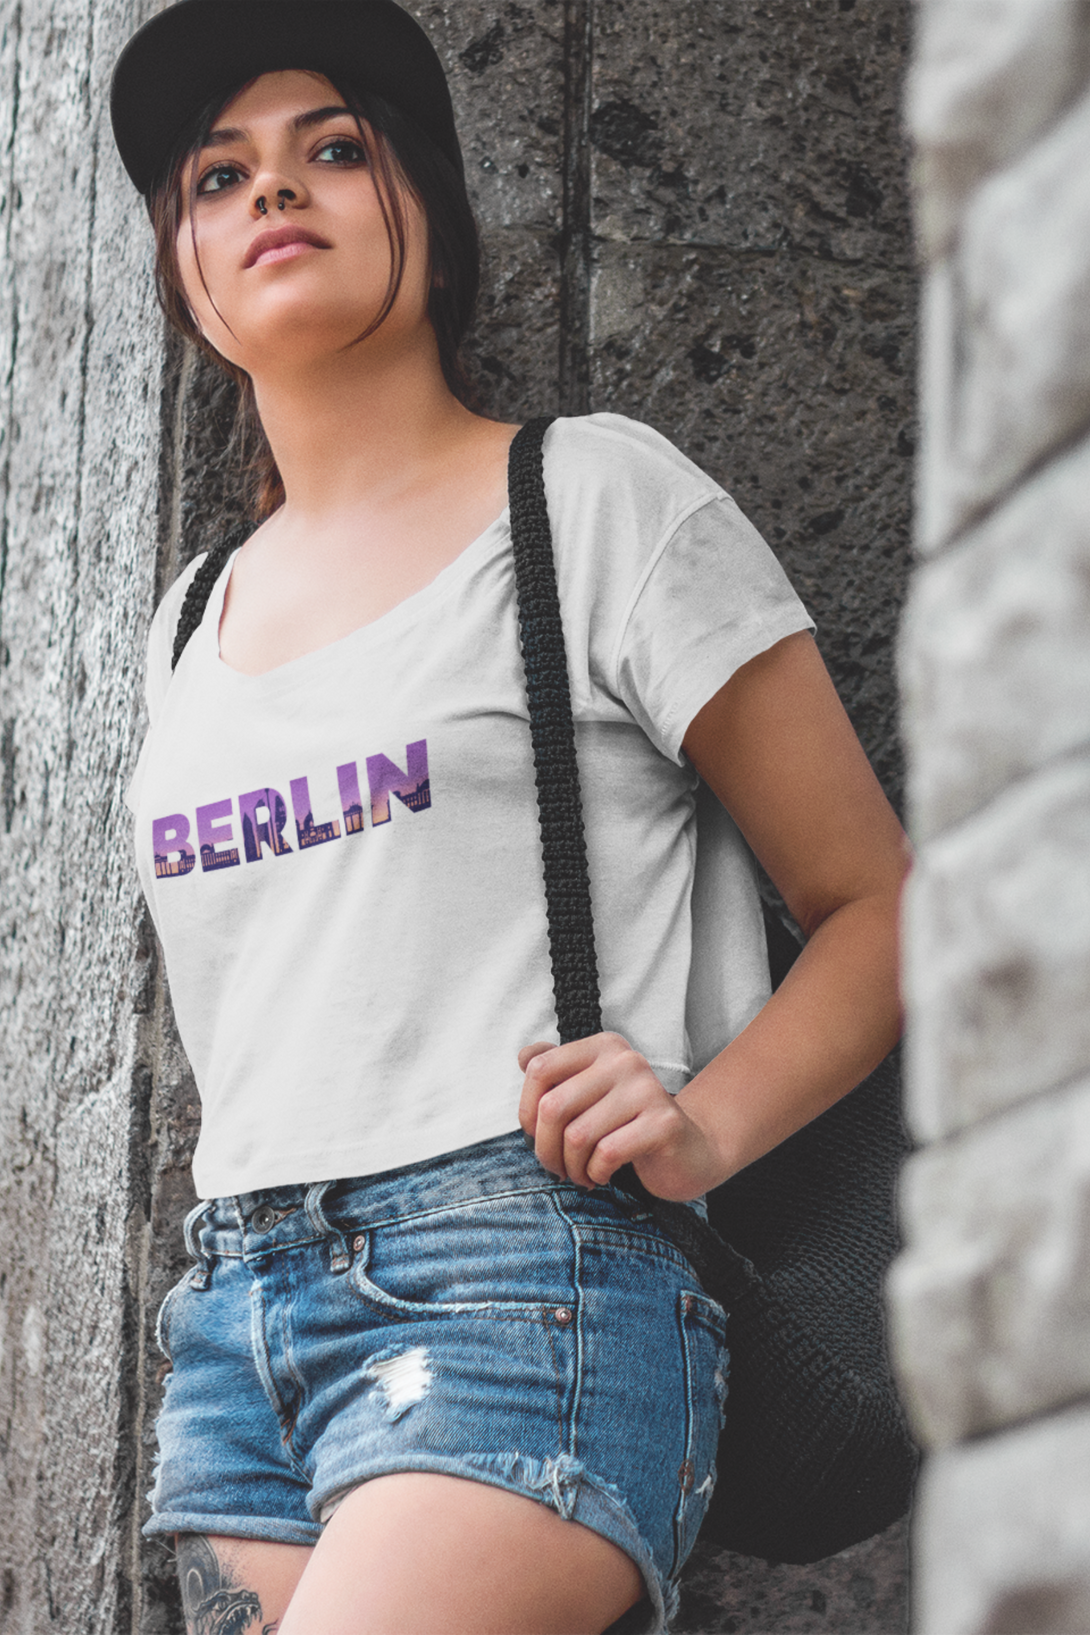 Berlin Skyline Printed Scoop Neck T-Shirt For Women - WowWaves - 3